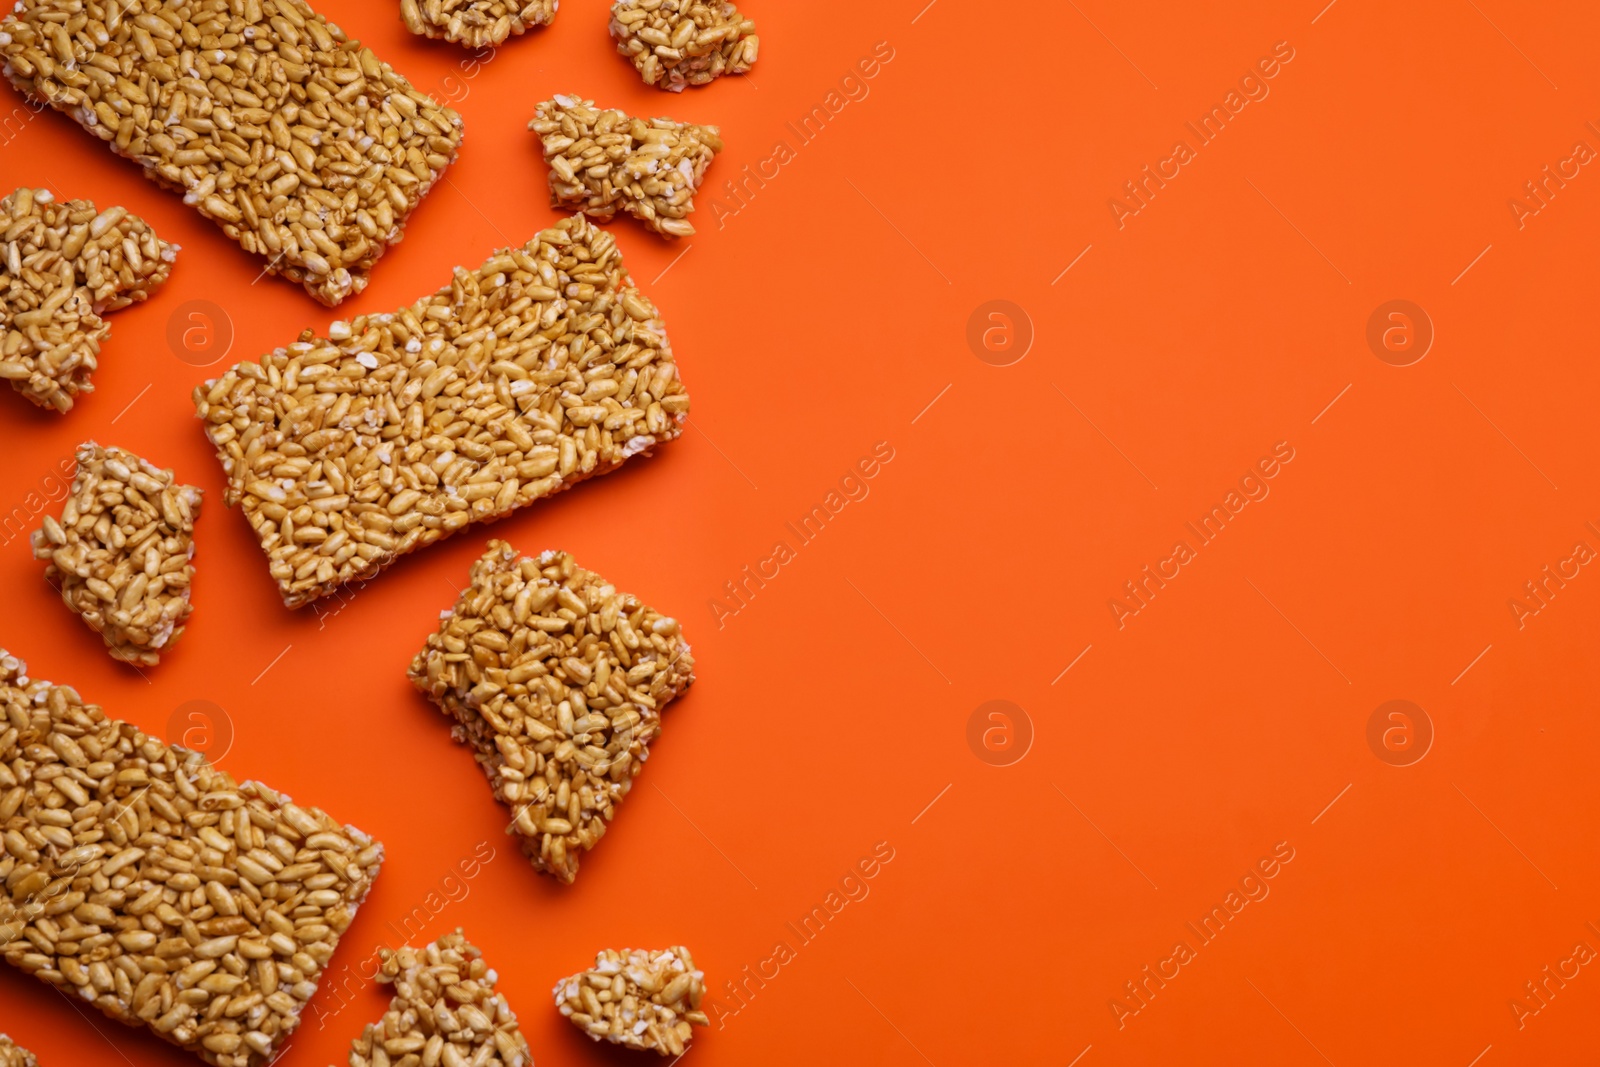 Photo of Puffed rice bars (kozinaki) on orange background, flat lay. Space for text